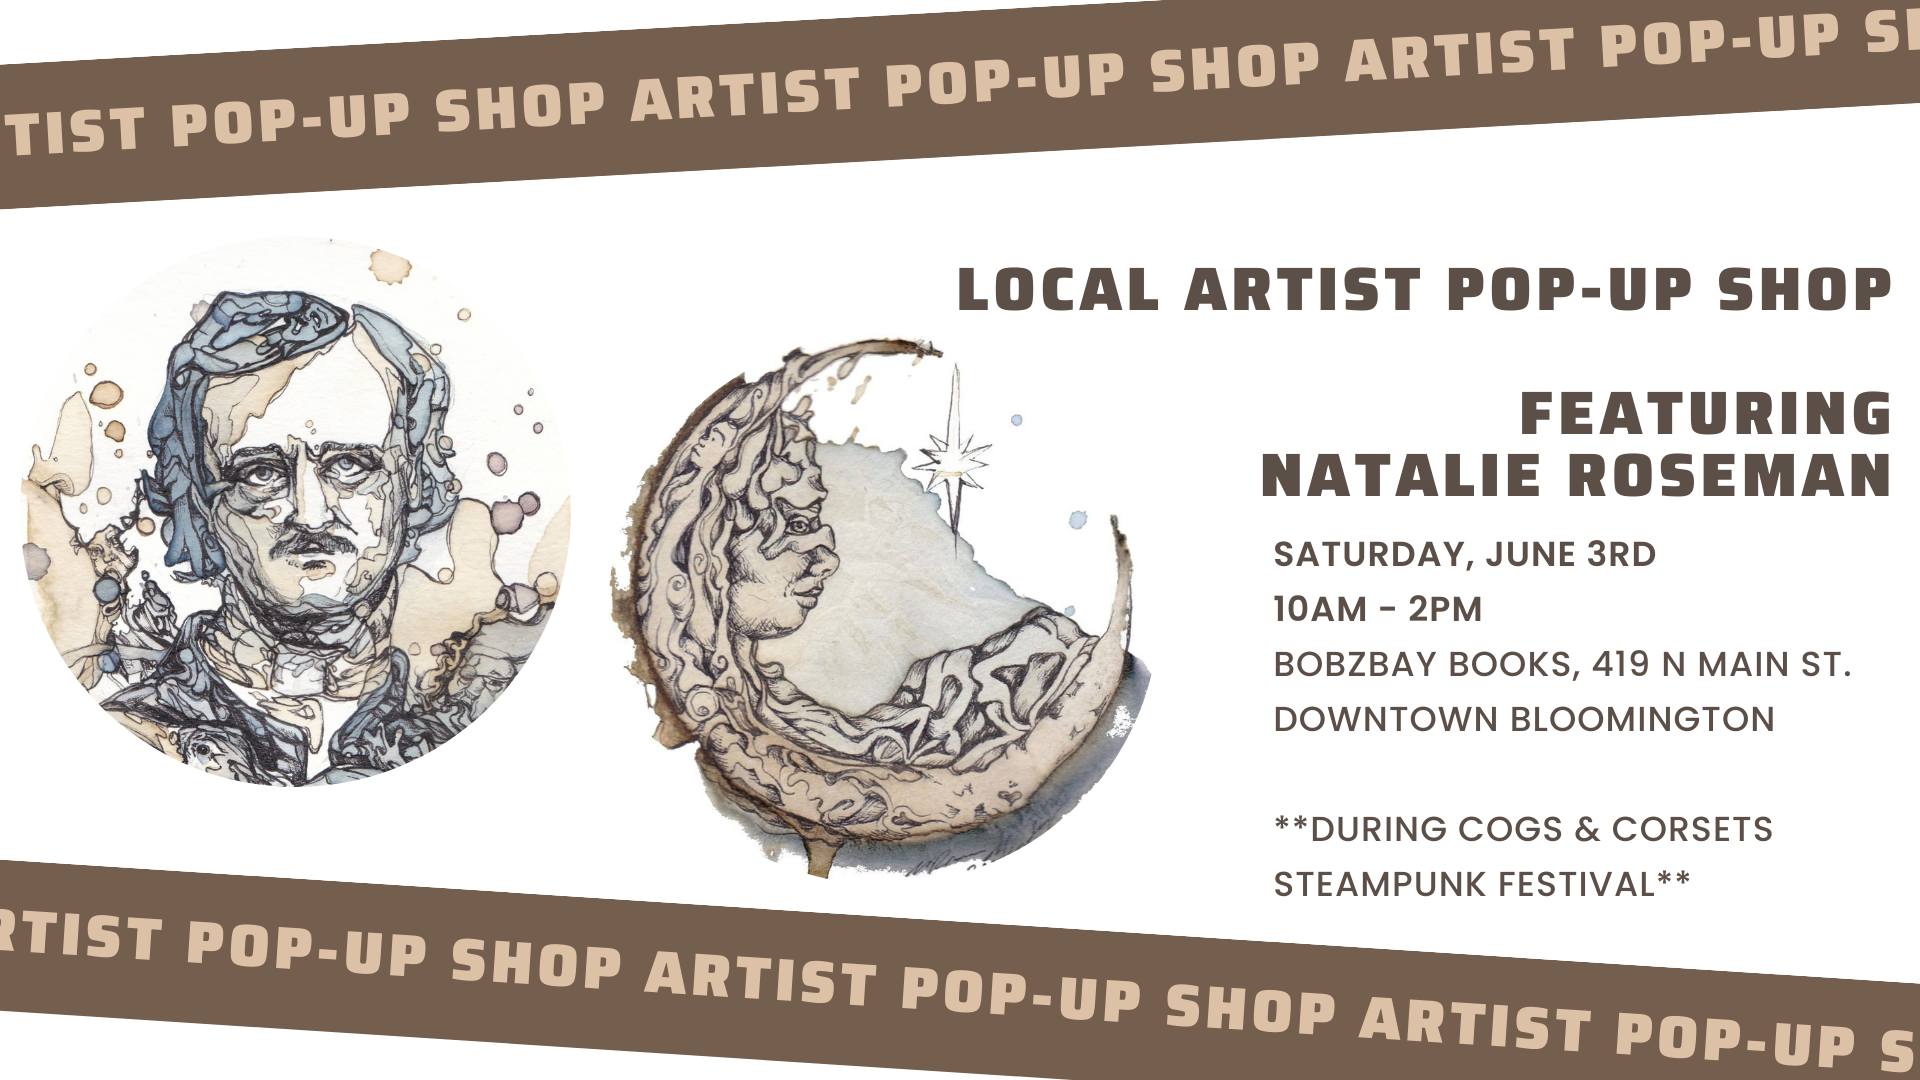 Saturday Artist Pop-Up Shop with Natalie Roseman at Bobzbay Books